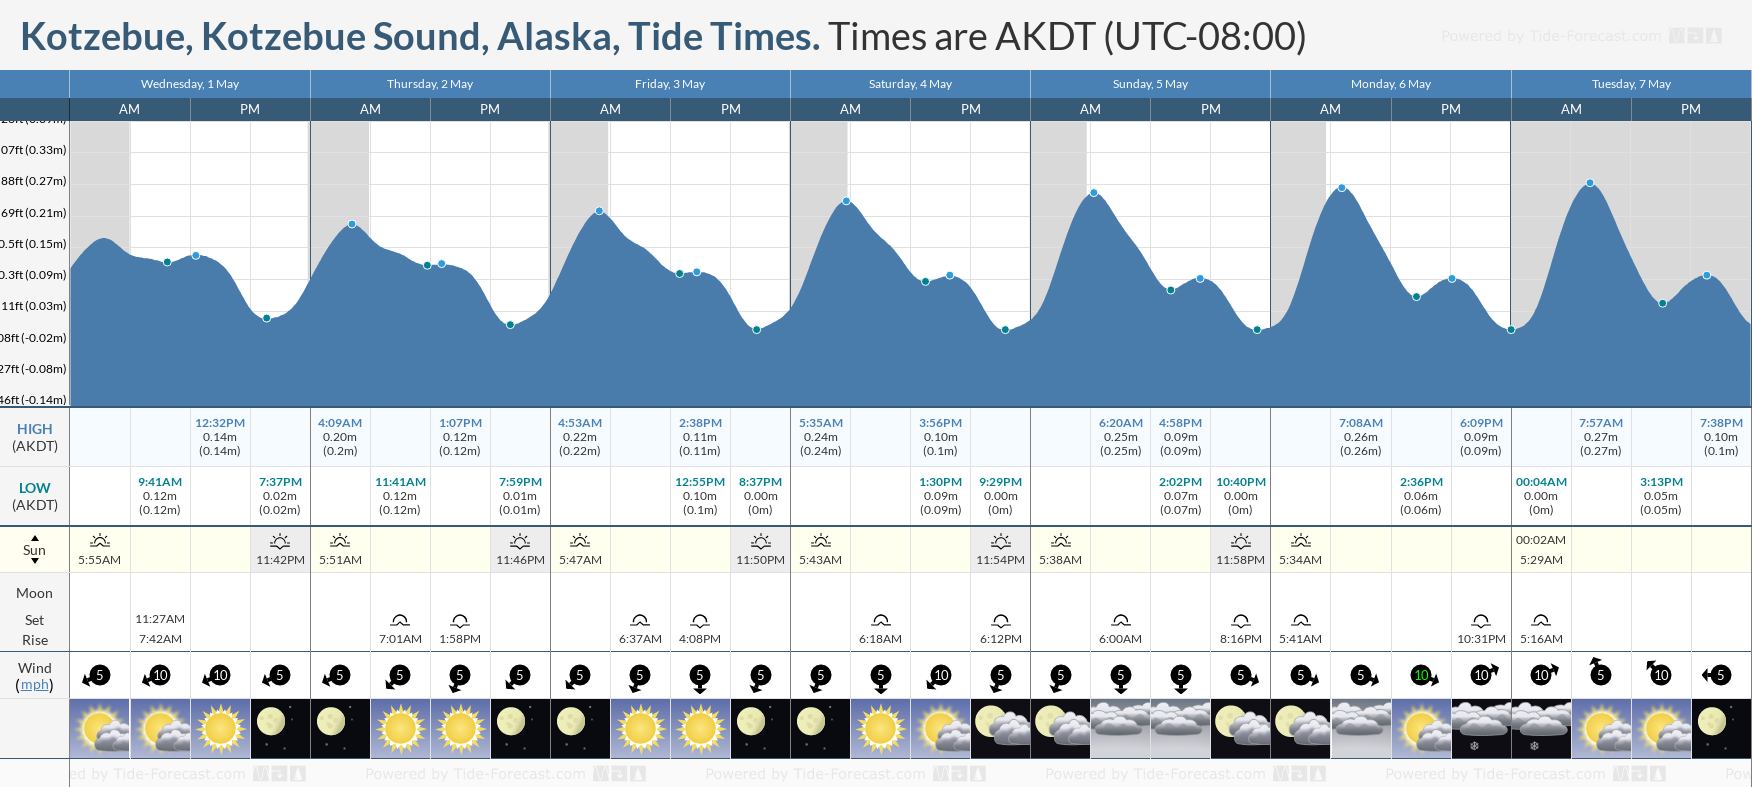 Kotzebue, Kotzebue Sound, Alaska Tide Chart including high and low tide tide times for the next 7 days